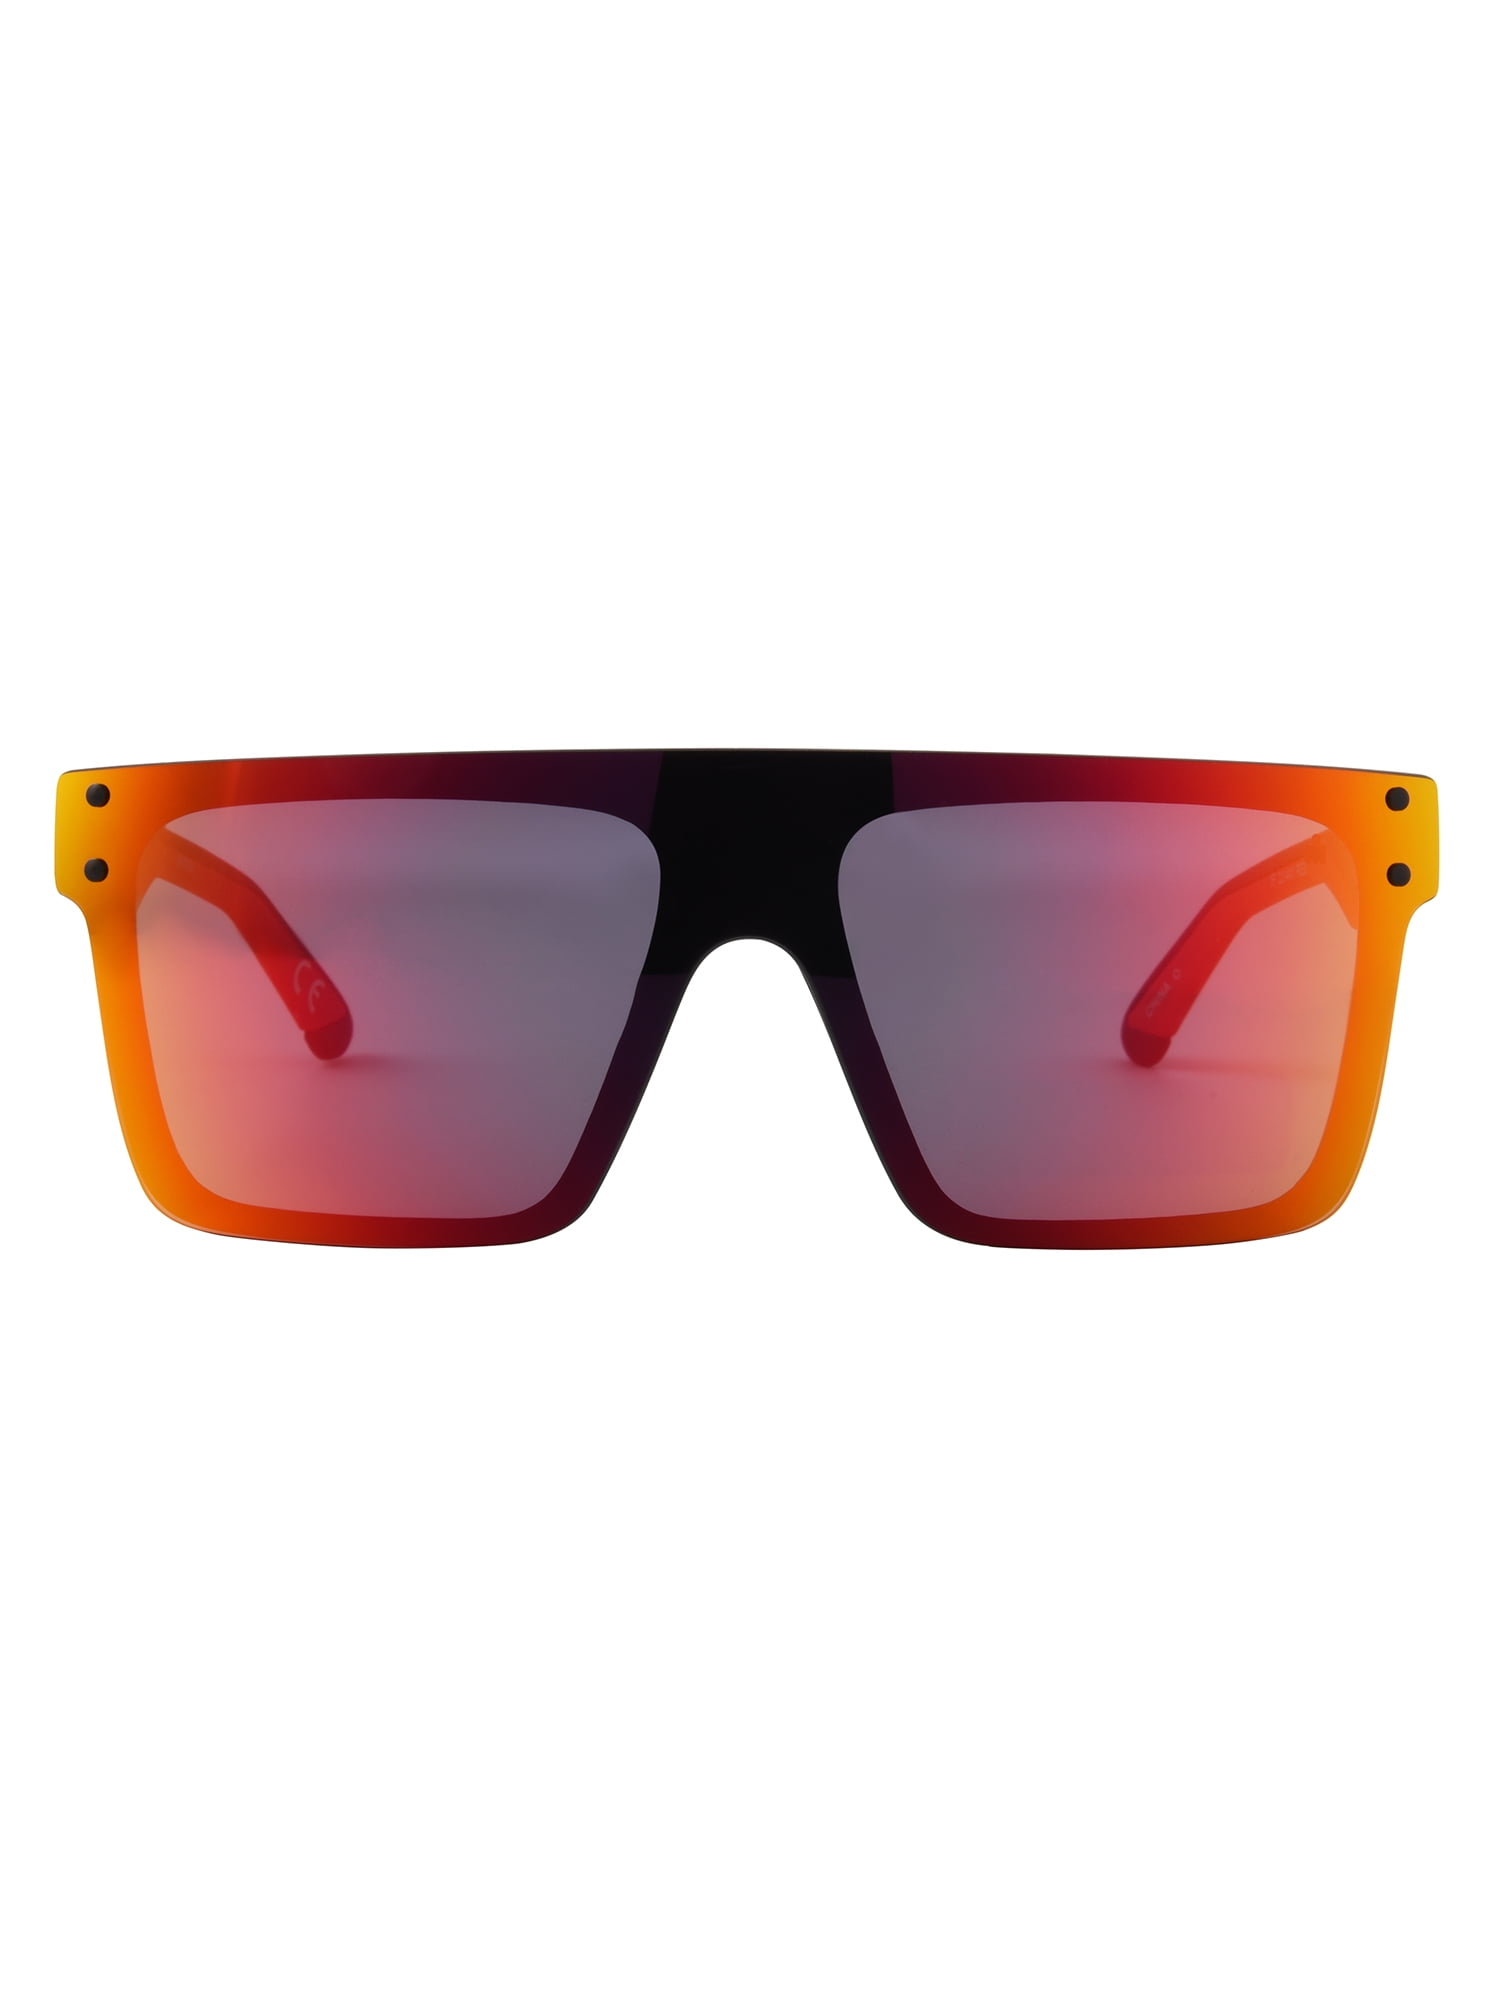 Ironman Men's Shield Sport Sunglasses Black Orange 